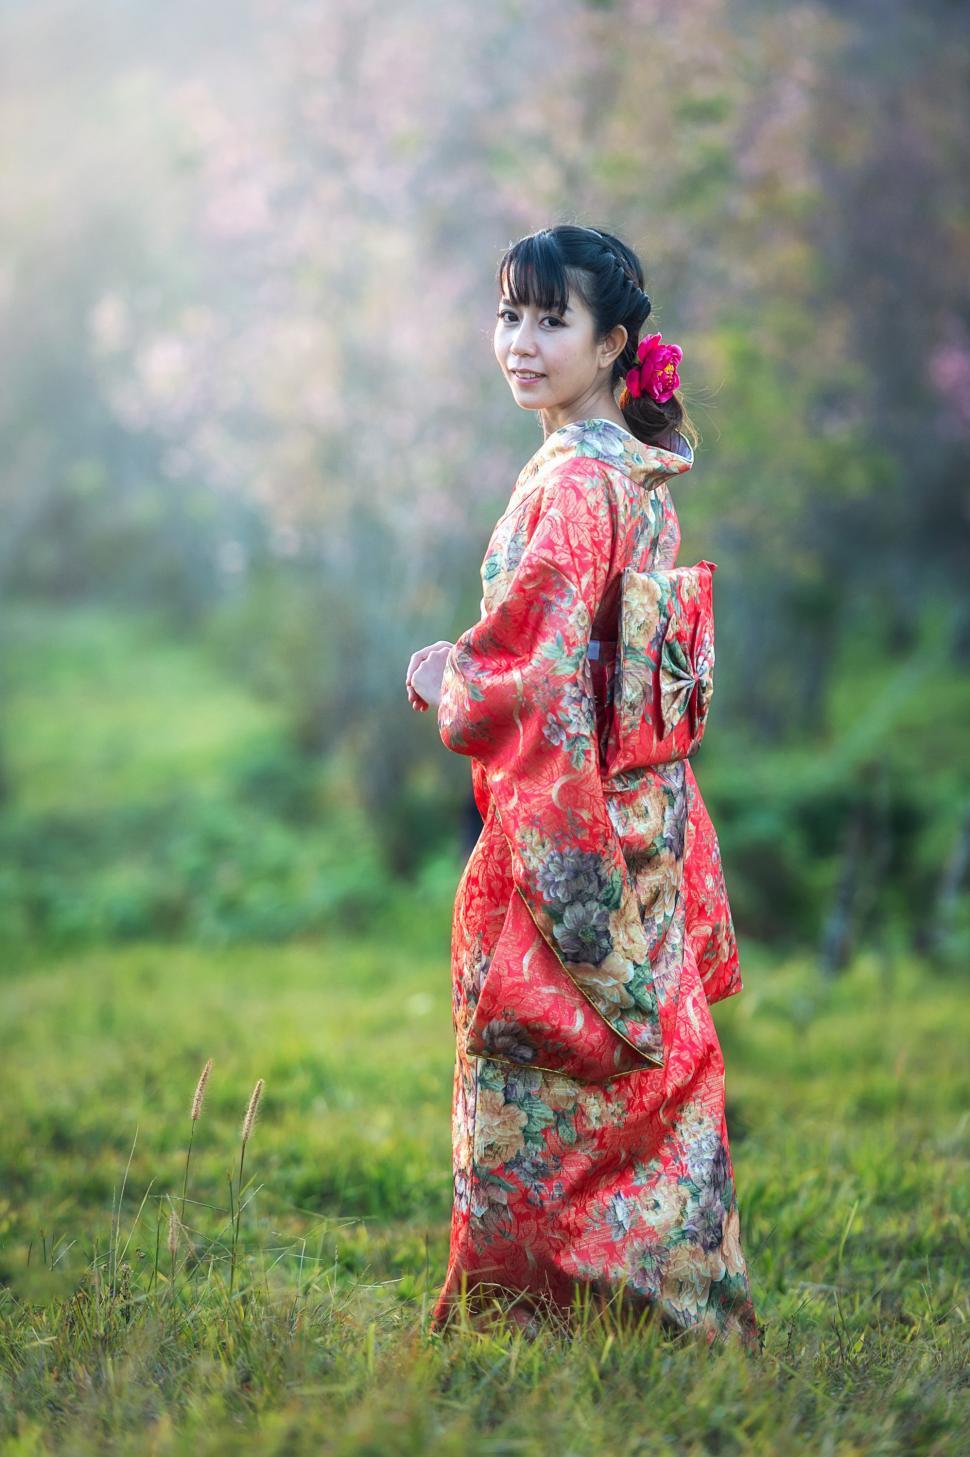 Free Image of Asian Woman Posing 